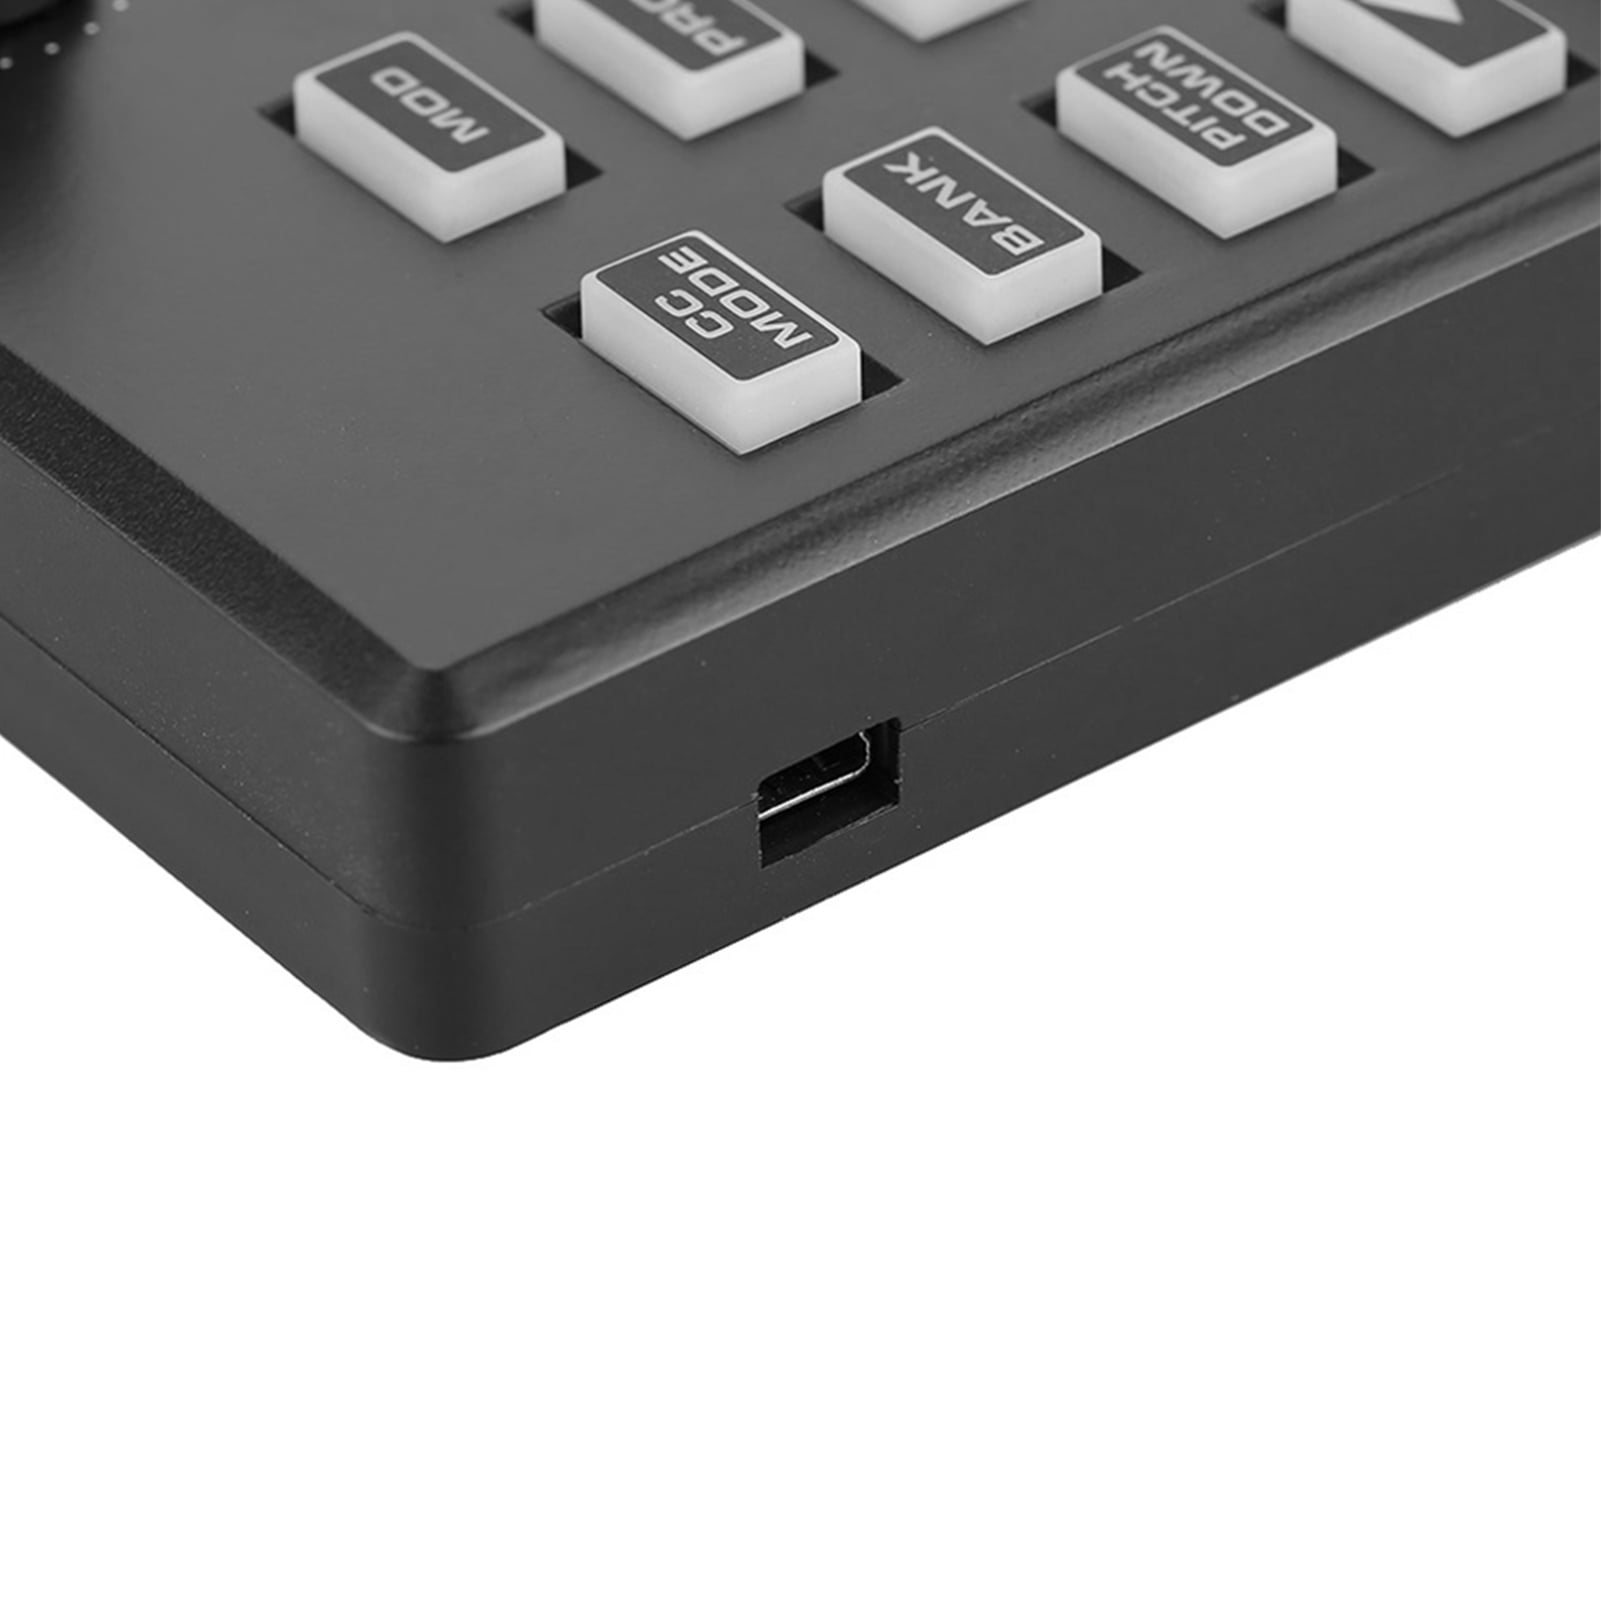 🇺🇸]Vangoa MIDI Keyboard Controller 25 Keys